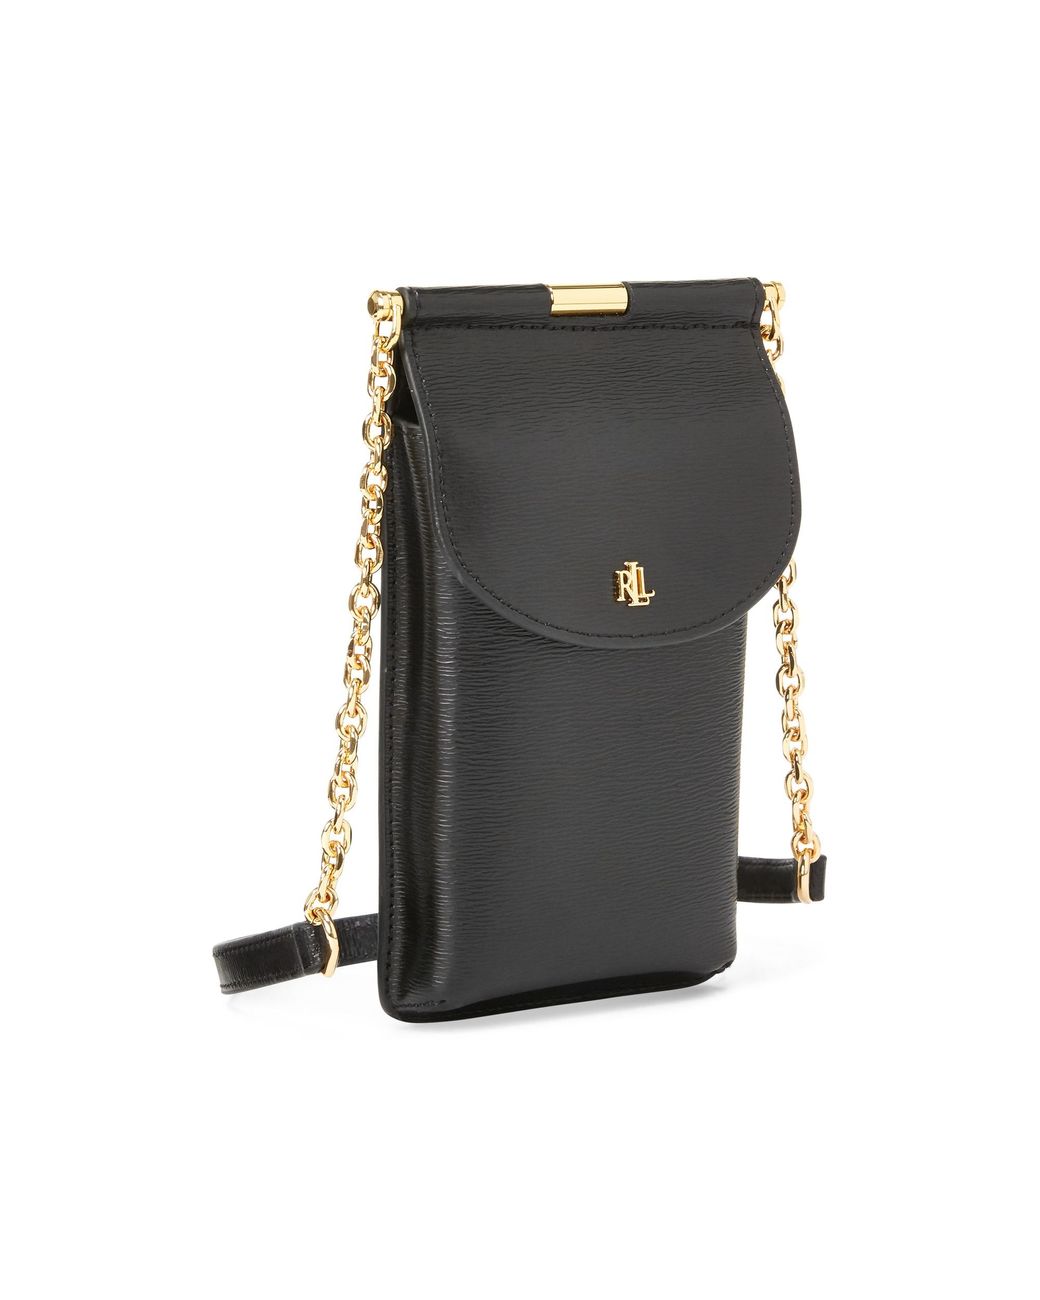 Ralph Lauren Leather Crossbody Phone Bag in Black | Lyst